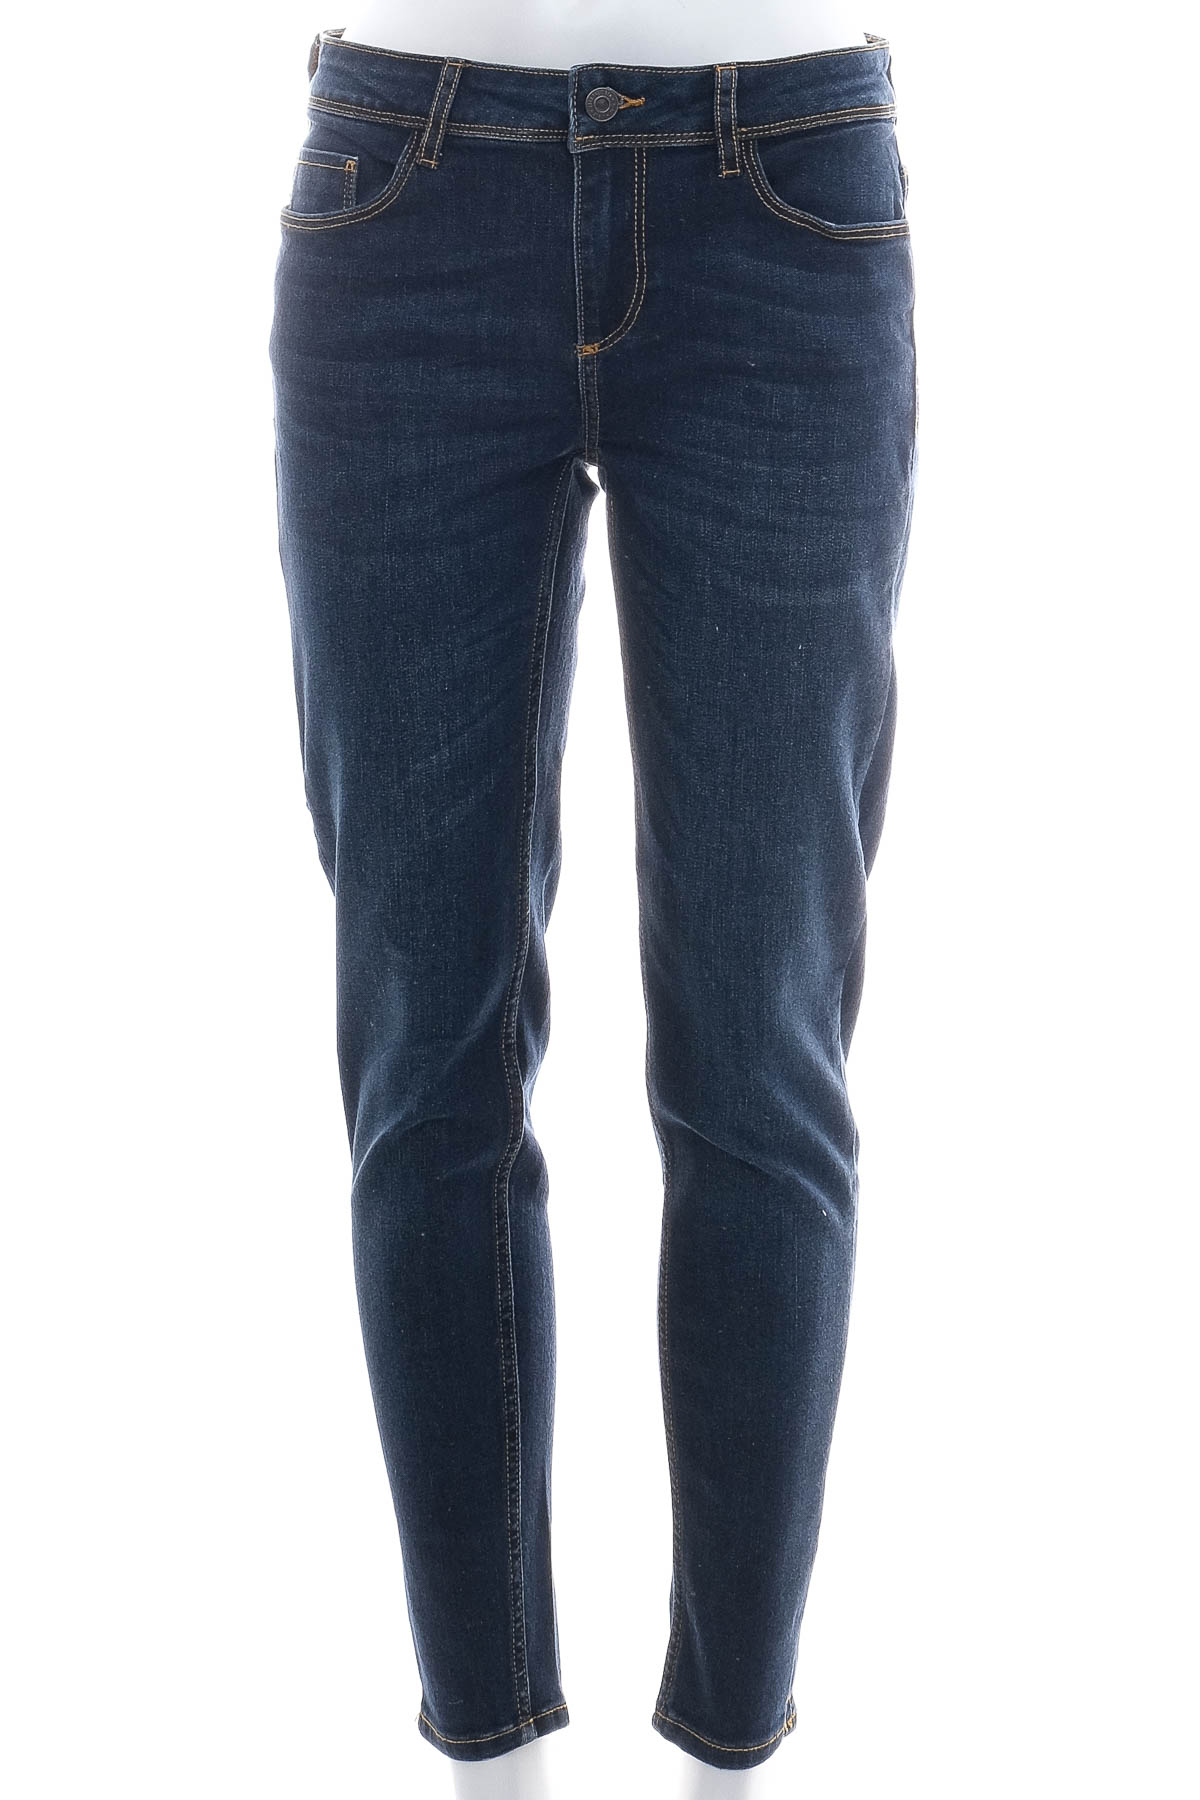 Women's jeans - ZARA Basic - 0